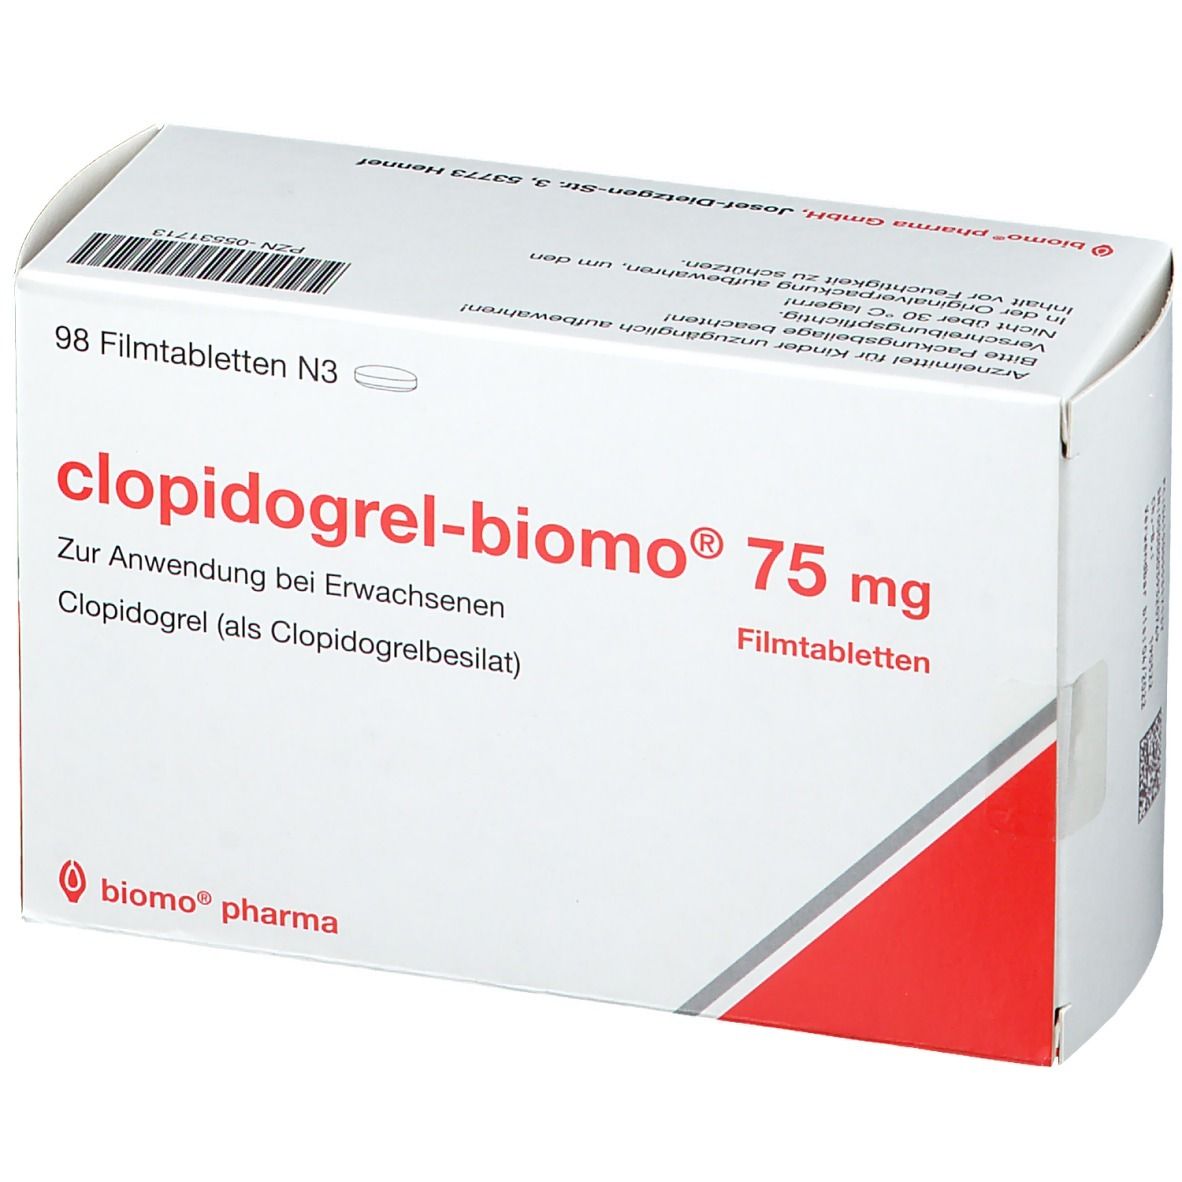 clopidogrel-biomo® 75 mg